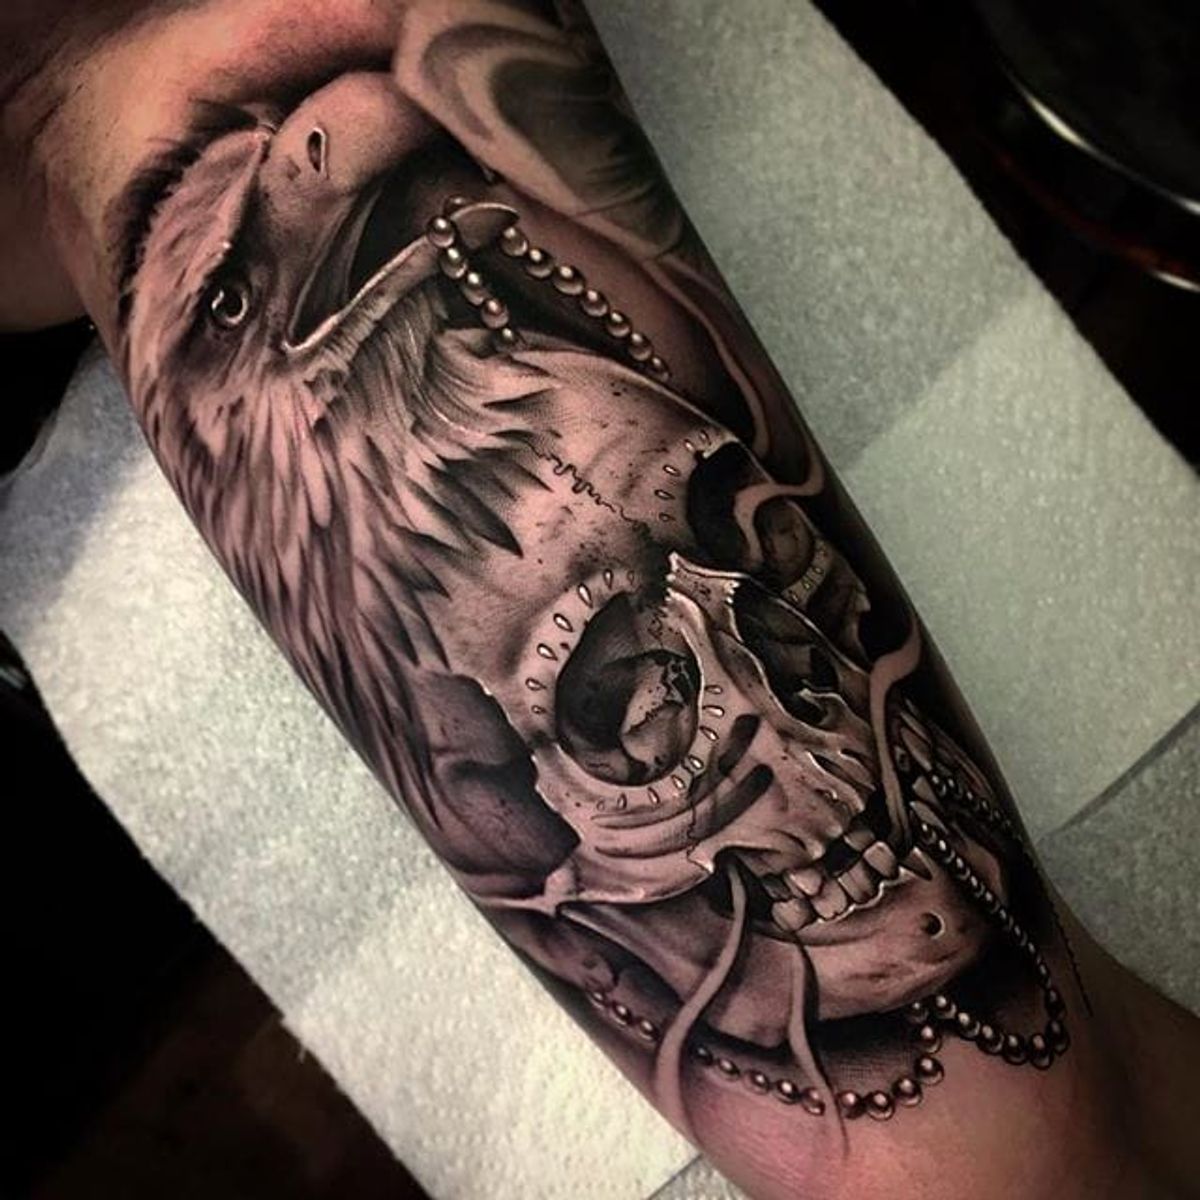 Tattoo uploaded by minerva • Eagle and skull half sleeve tattoo by ...